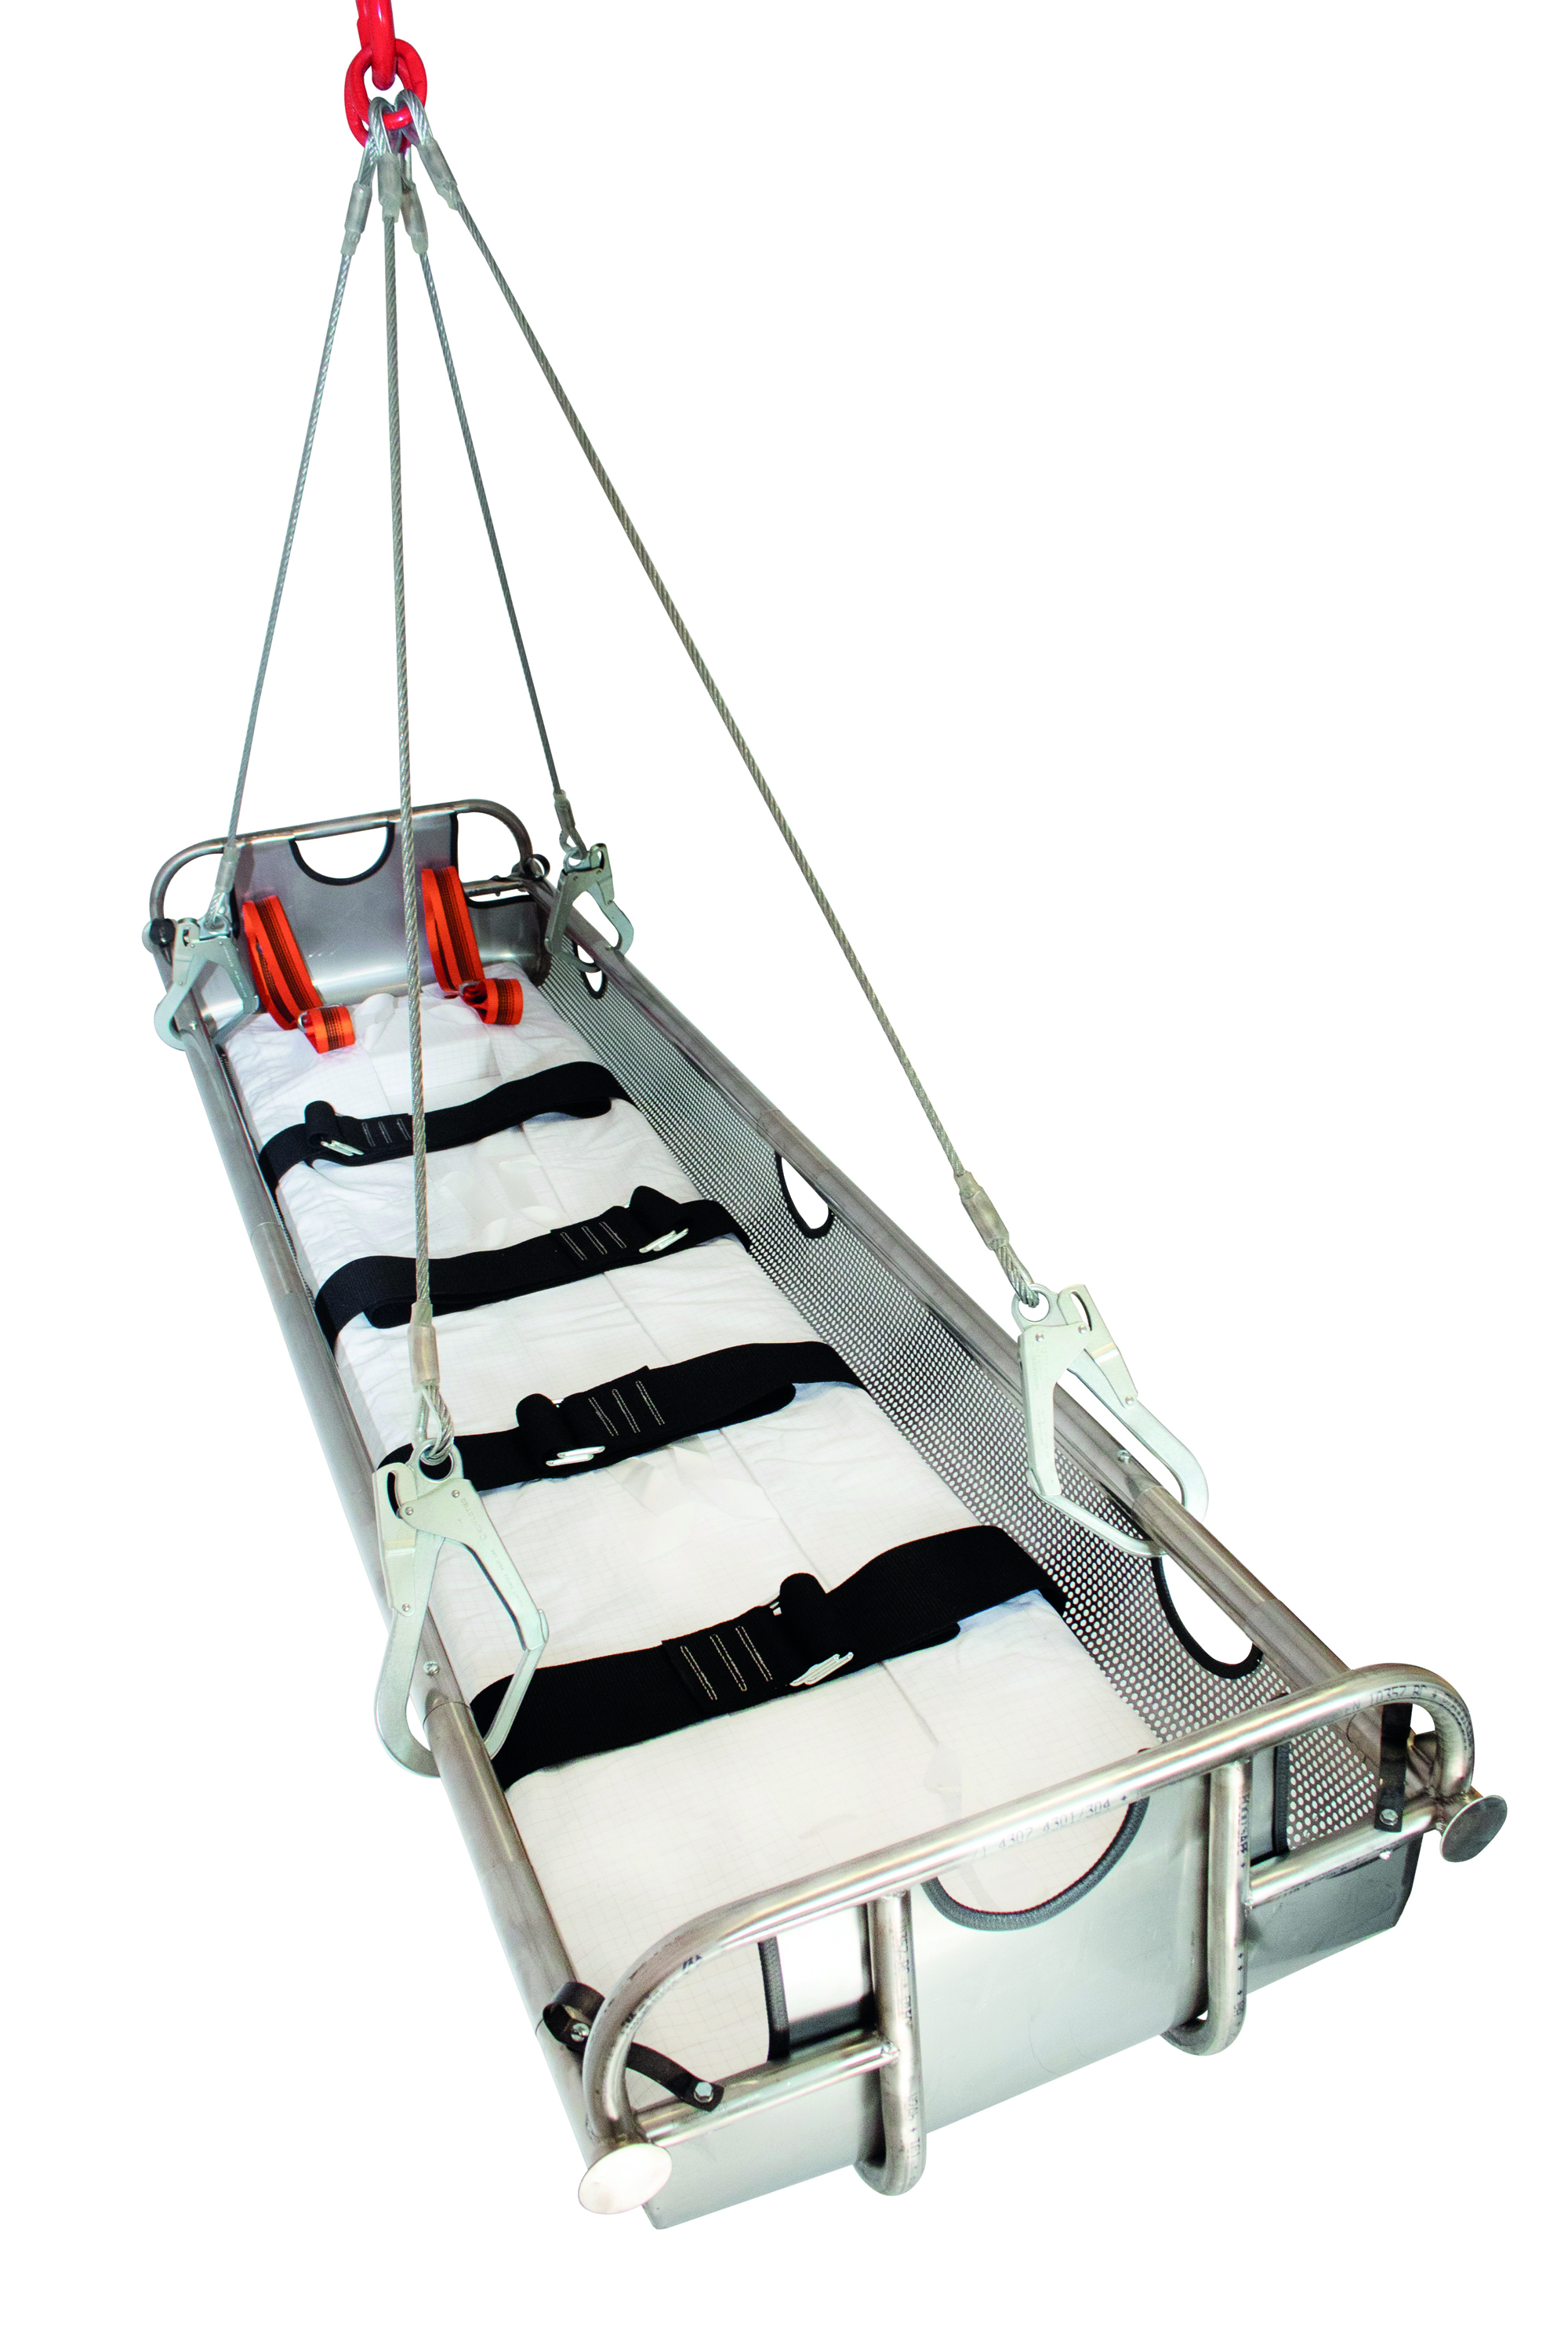 ultraMINING PLUS Grinding basket stretcher